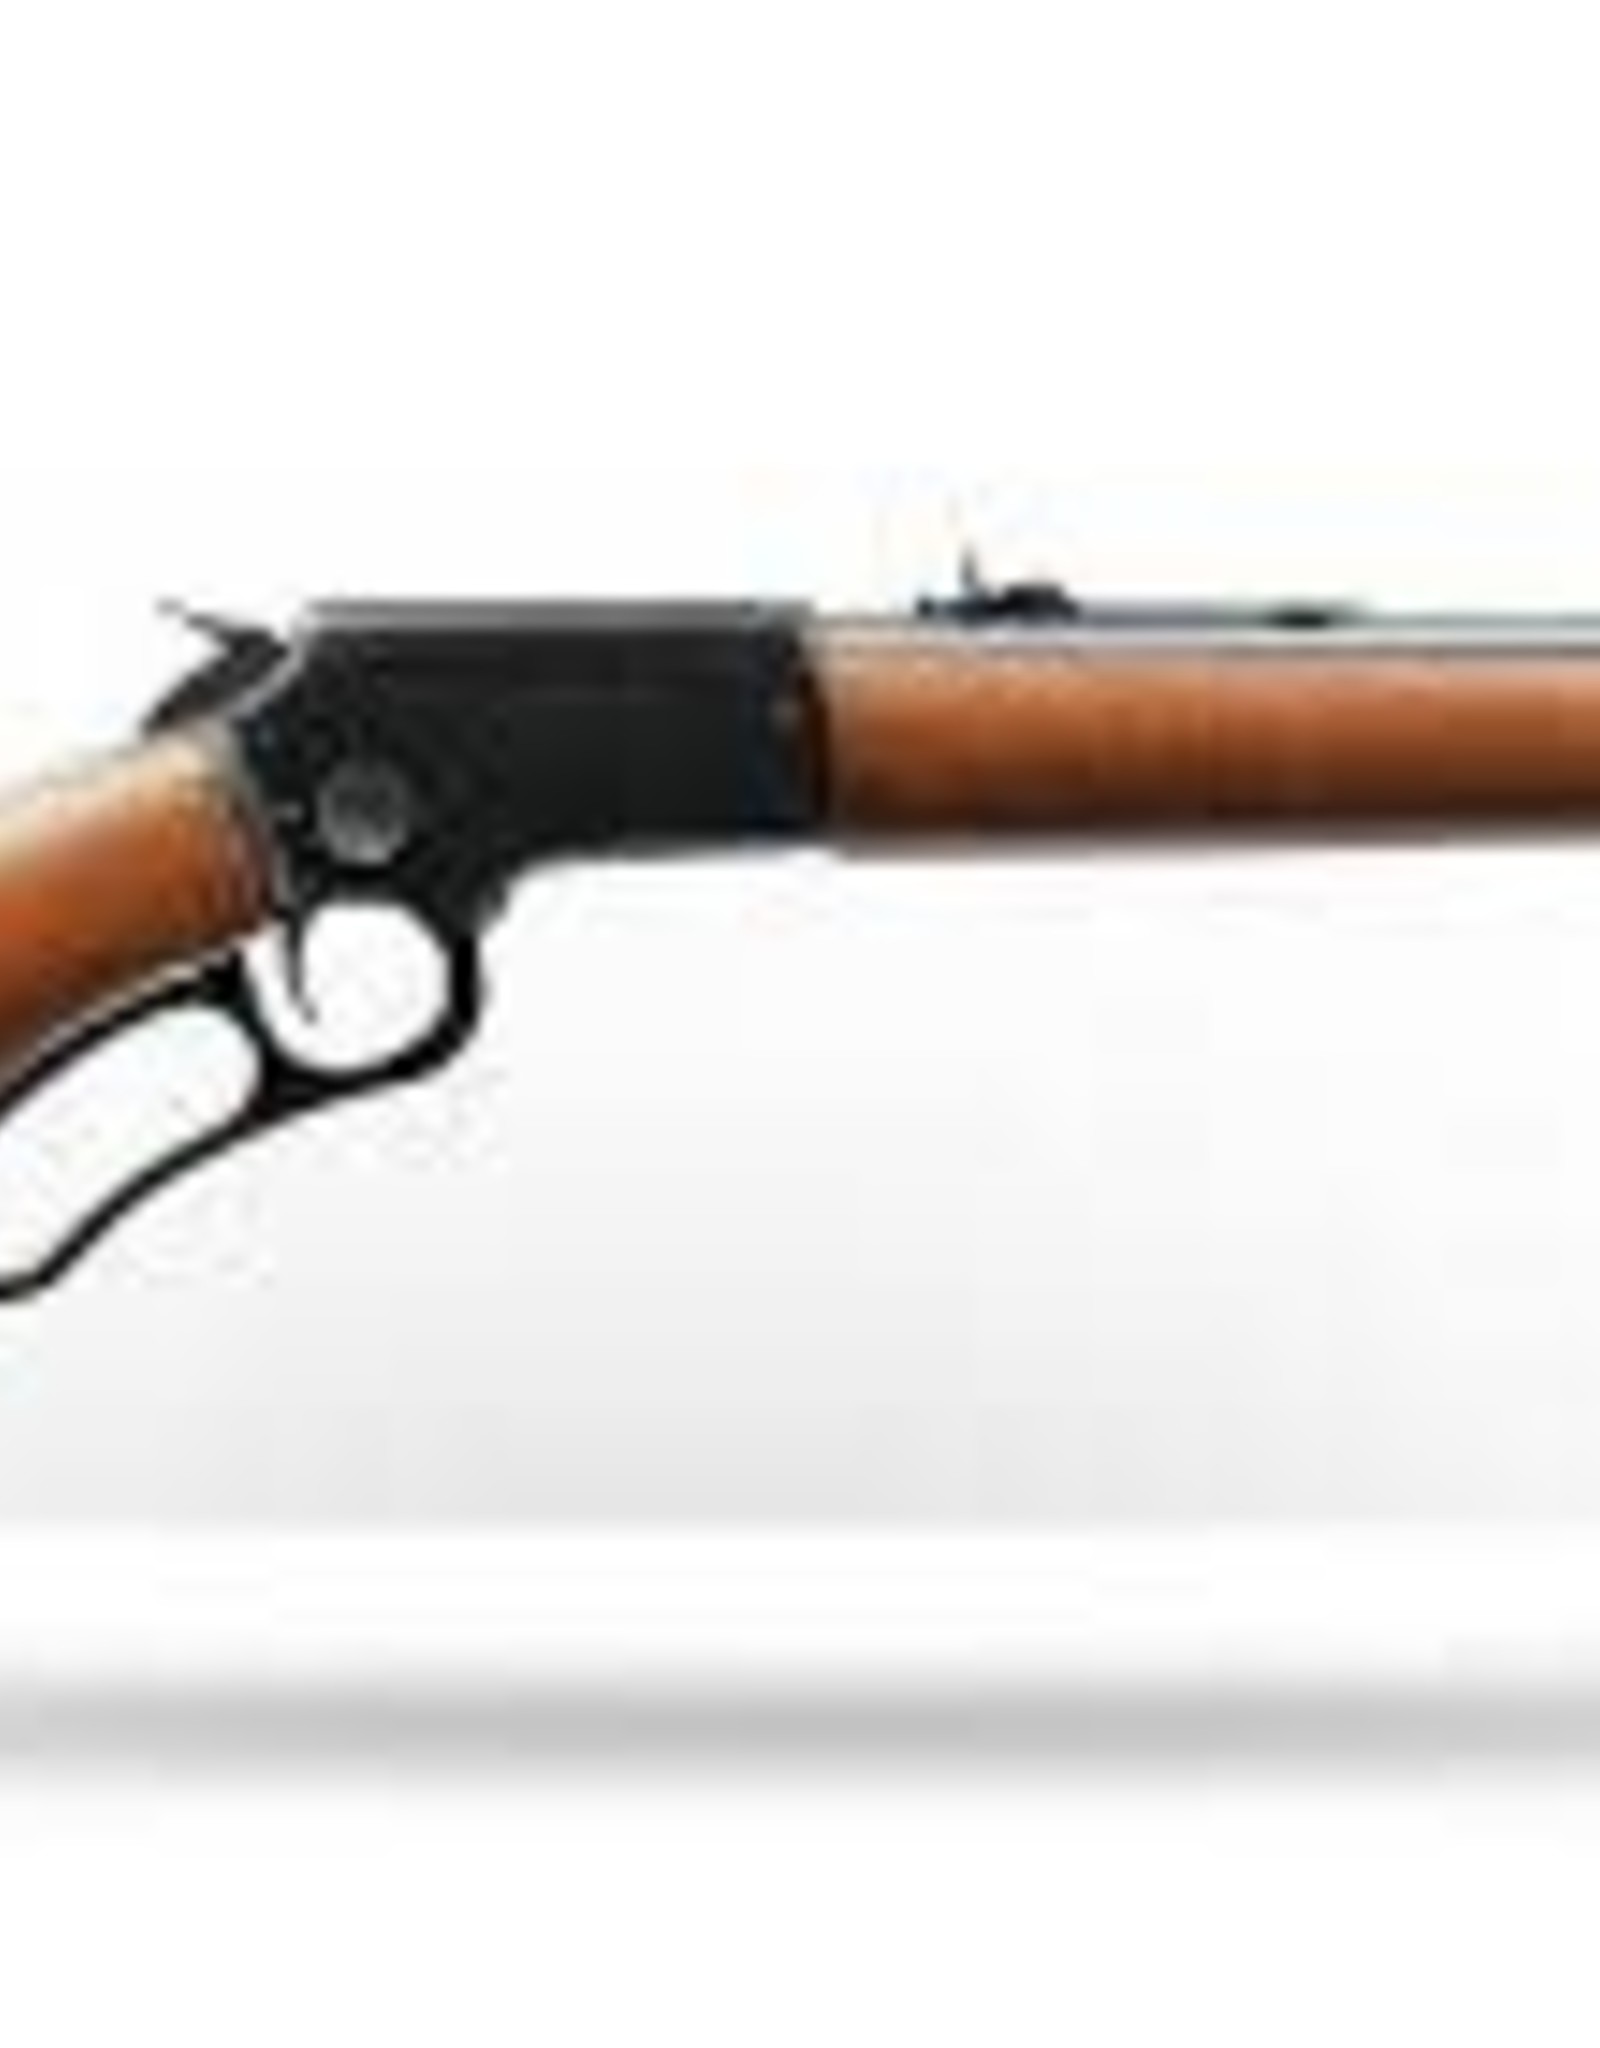 Chiappa L.A. Carbine Pistol Grip Take Down 22LR 18.5" Wood Stock